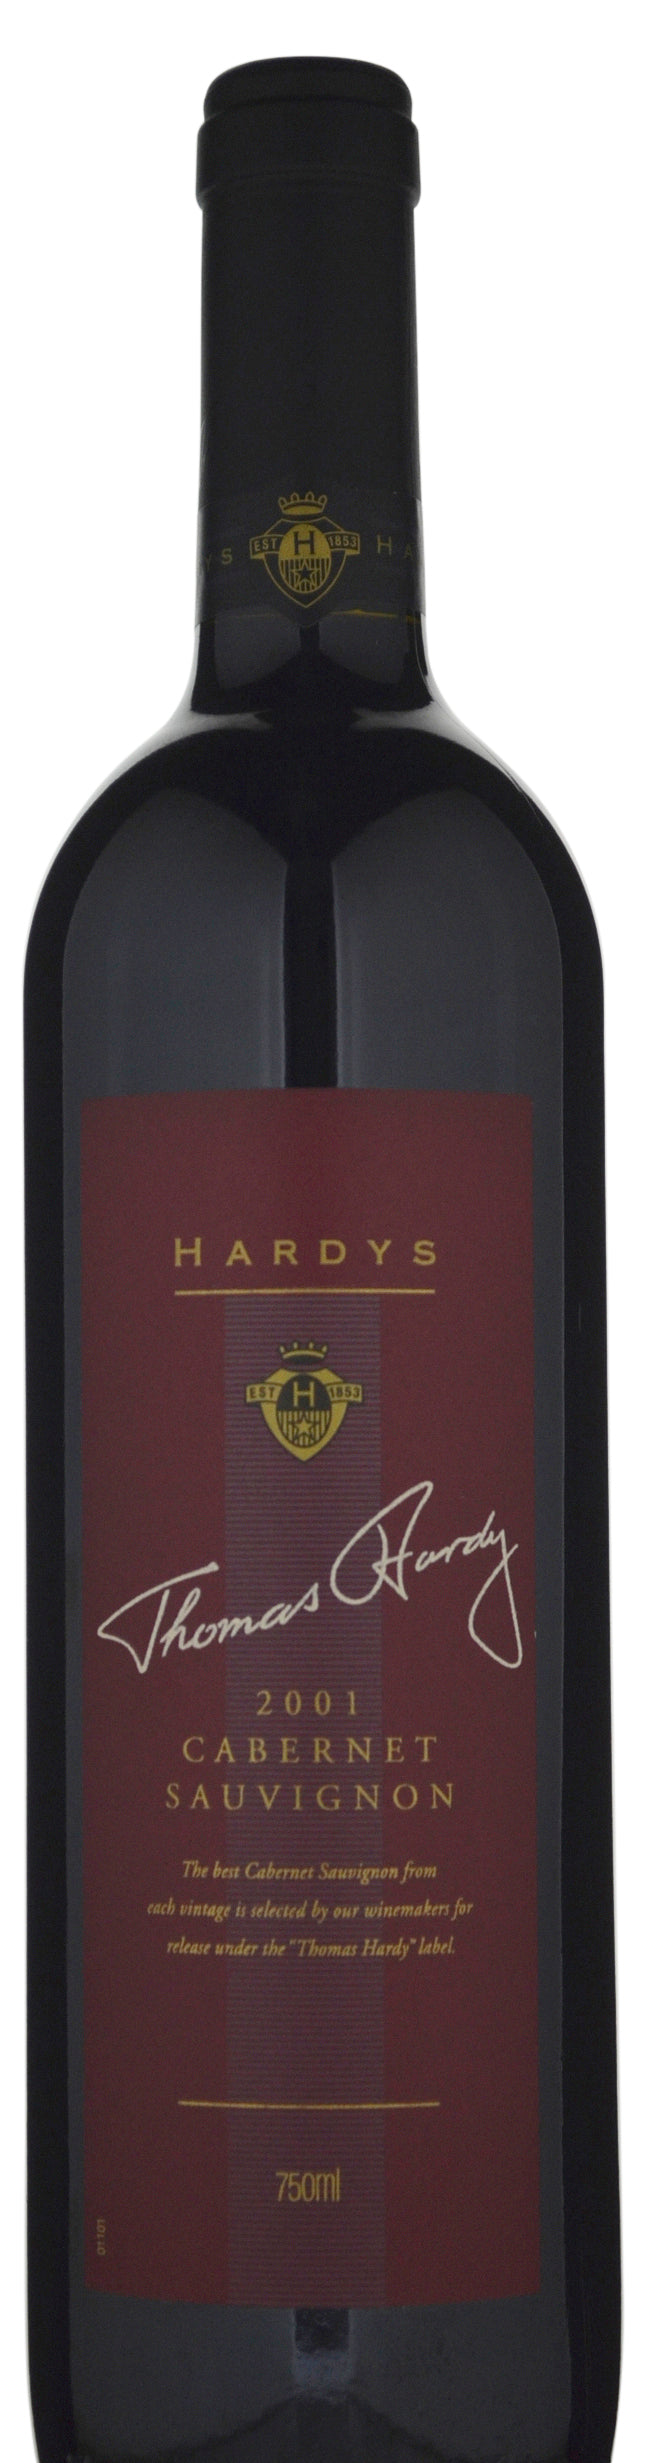 Hardy's Thomas Hardy Cabernet Sauvignon 2001